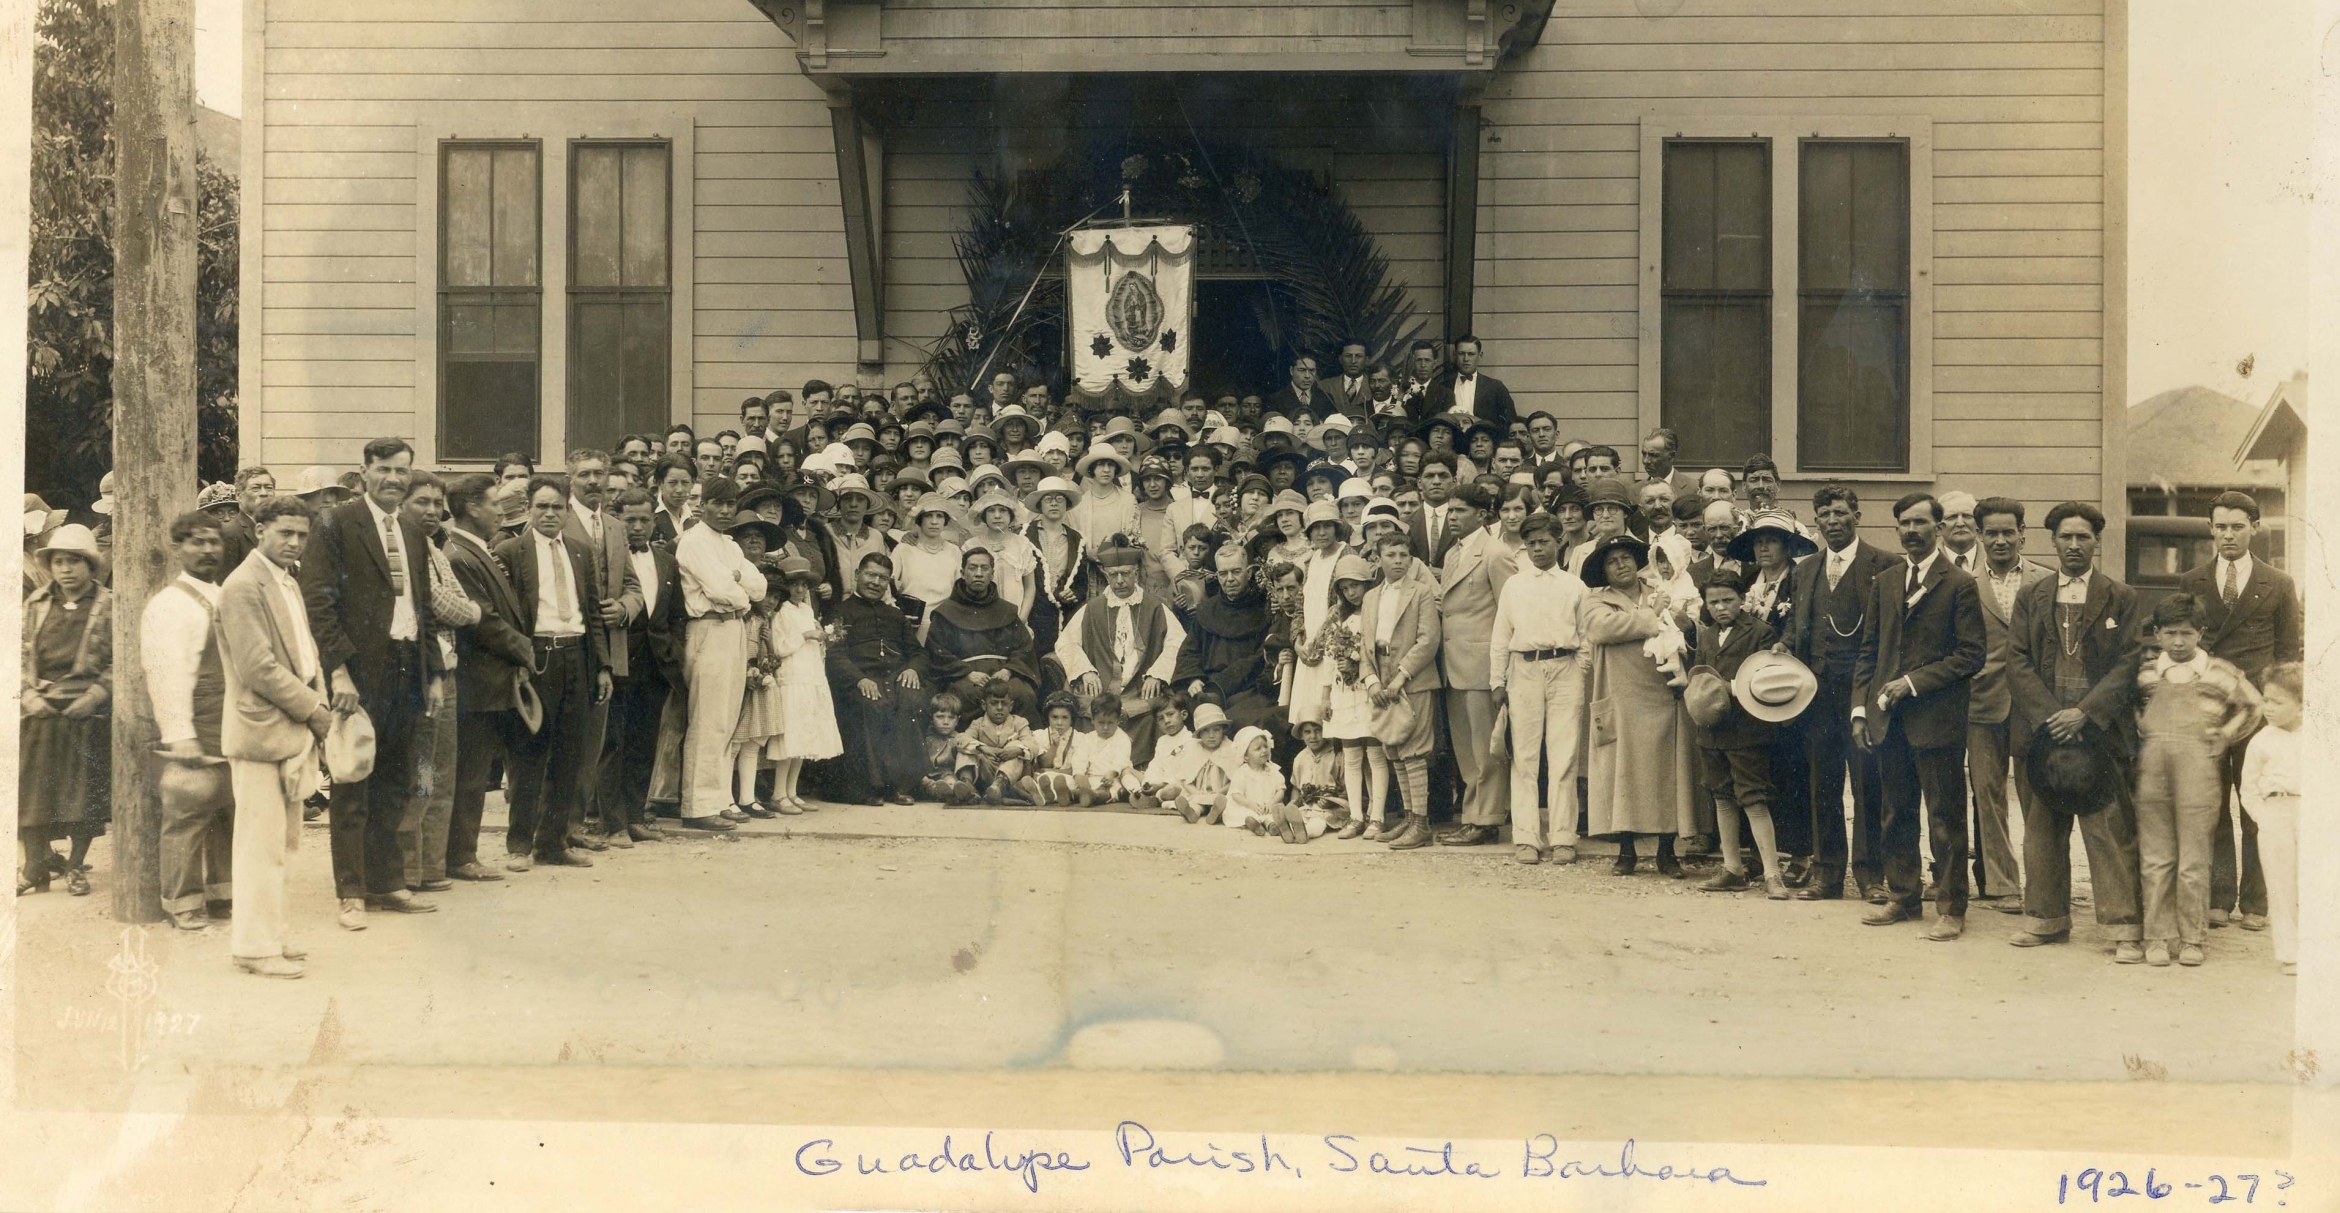 Our Lady of Guadalupe Parish in Santa Barbara, circa 1926